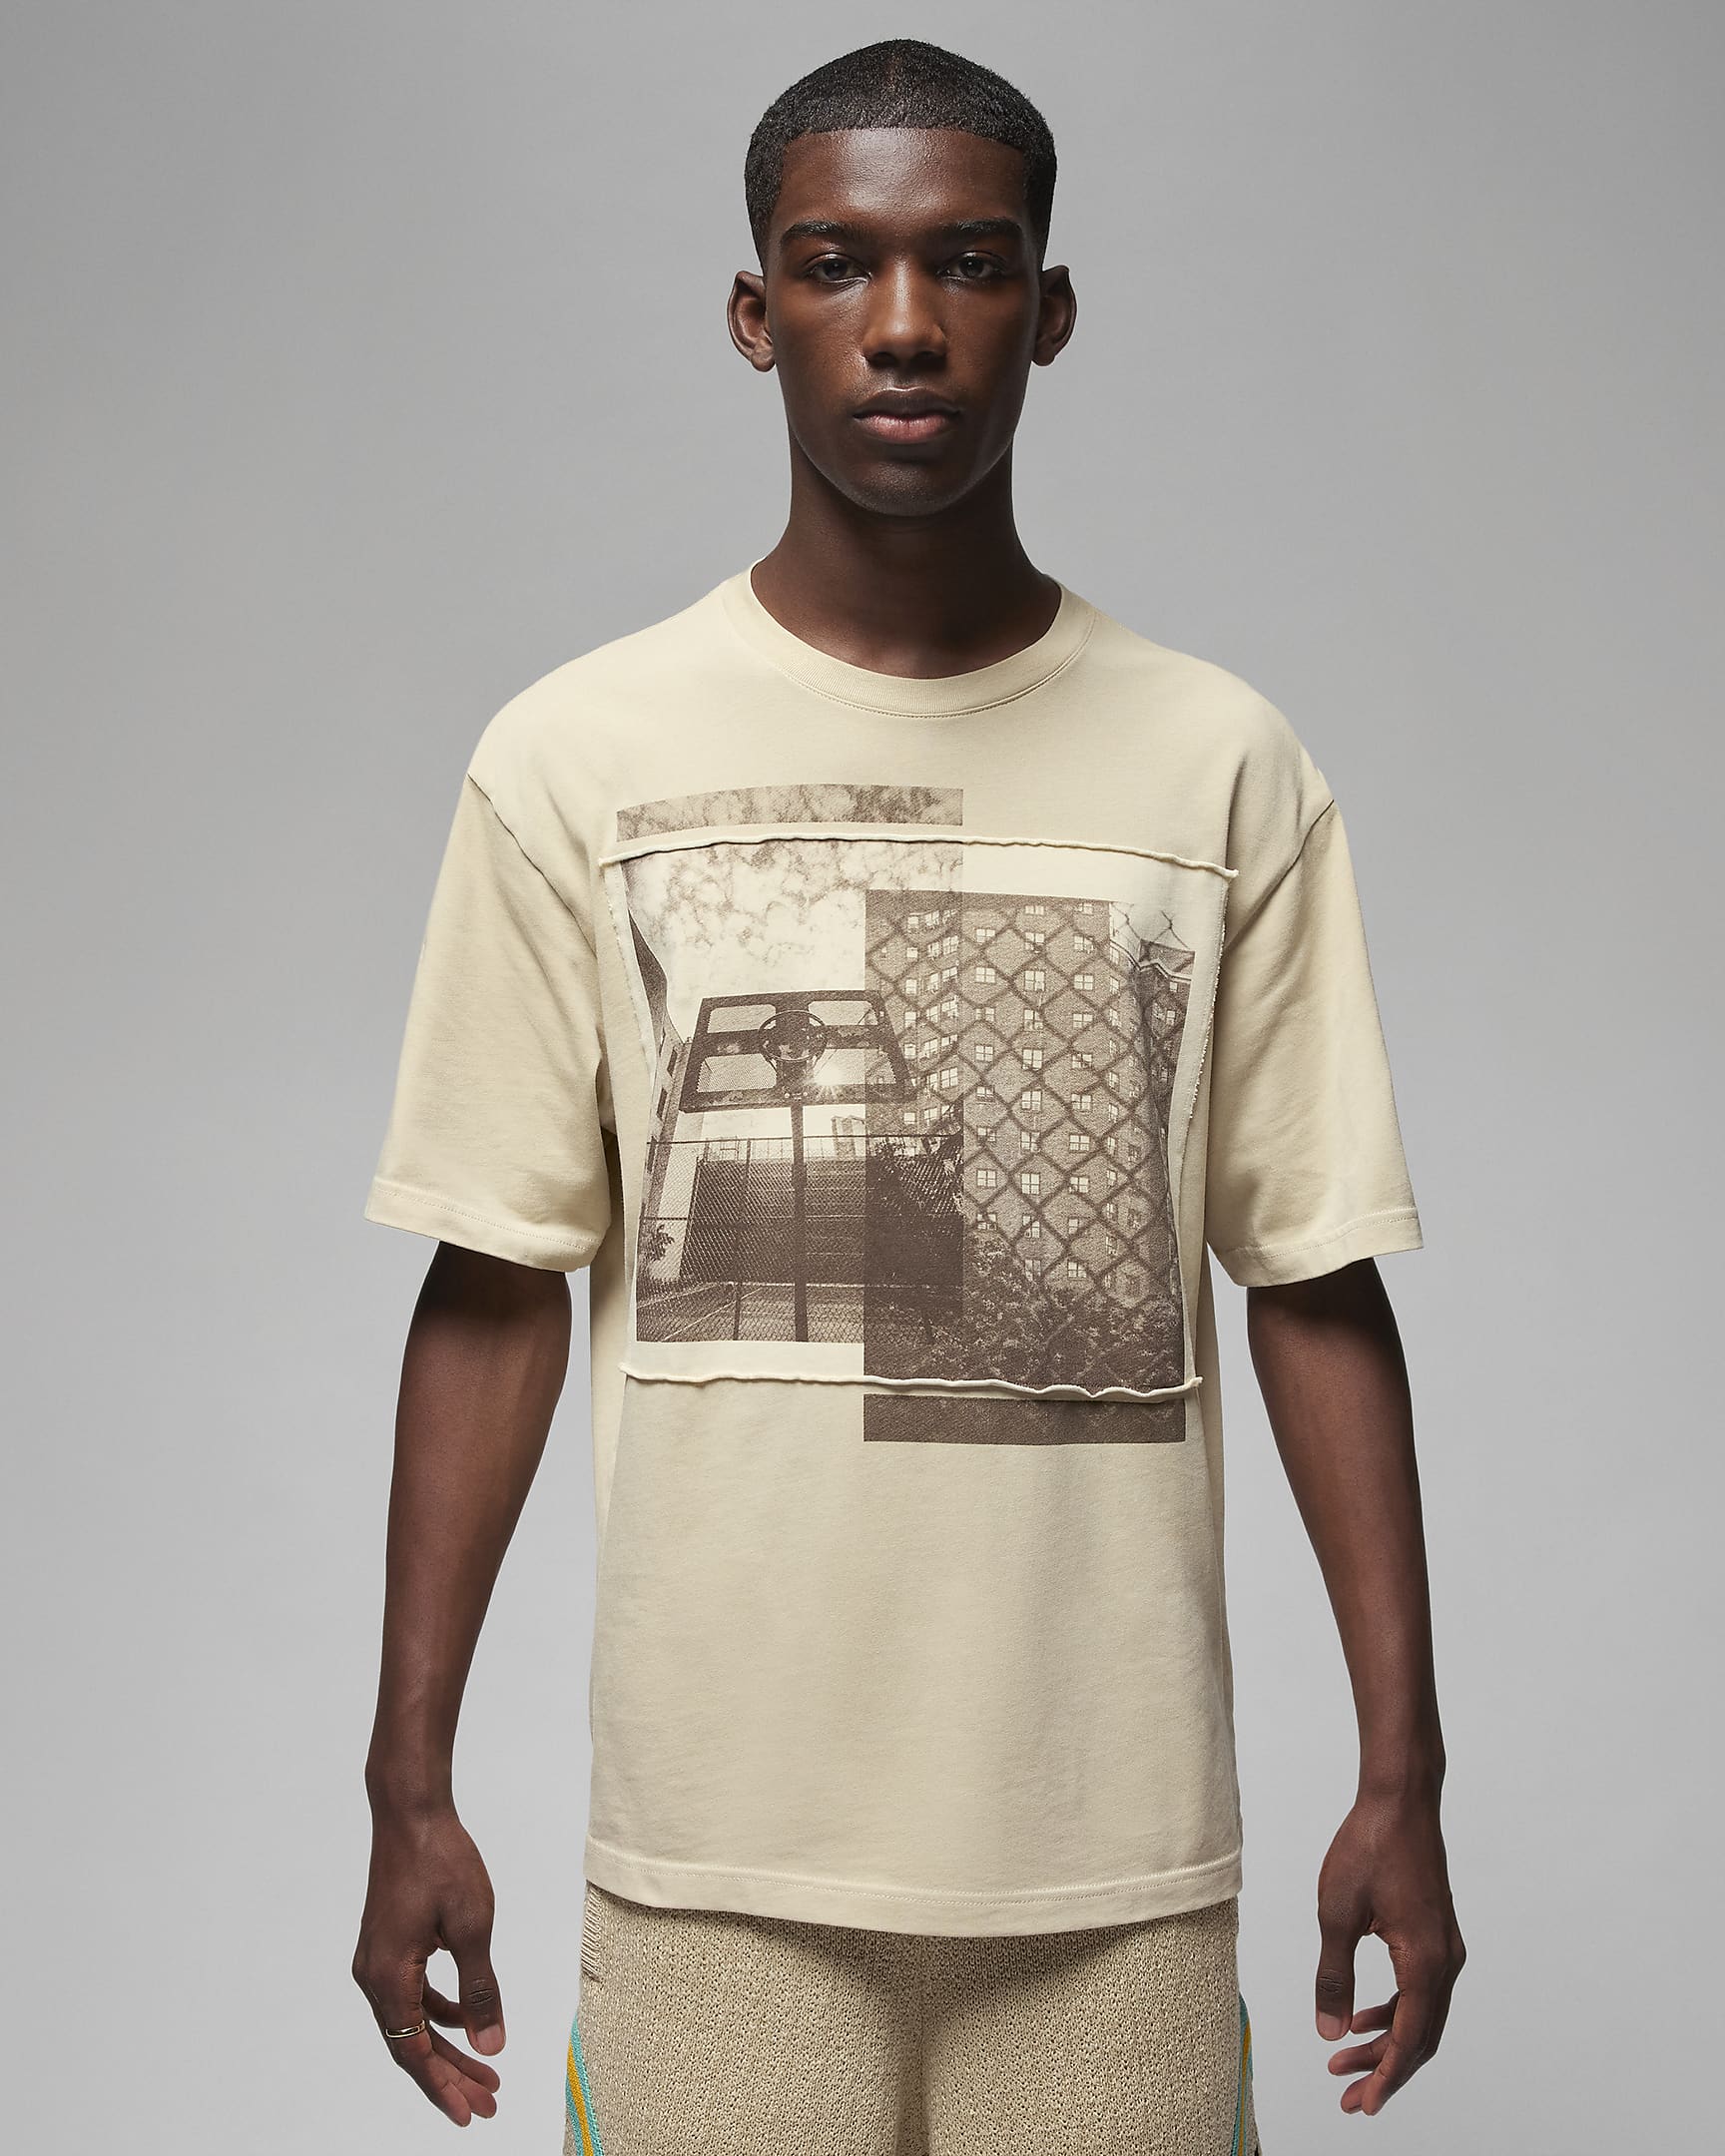 Jordan x UNION x Bephies Beauty Supply Men's T-Shirt. Nike NL